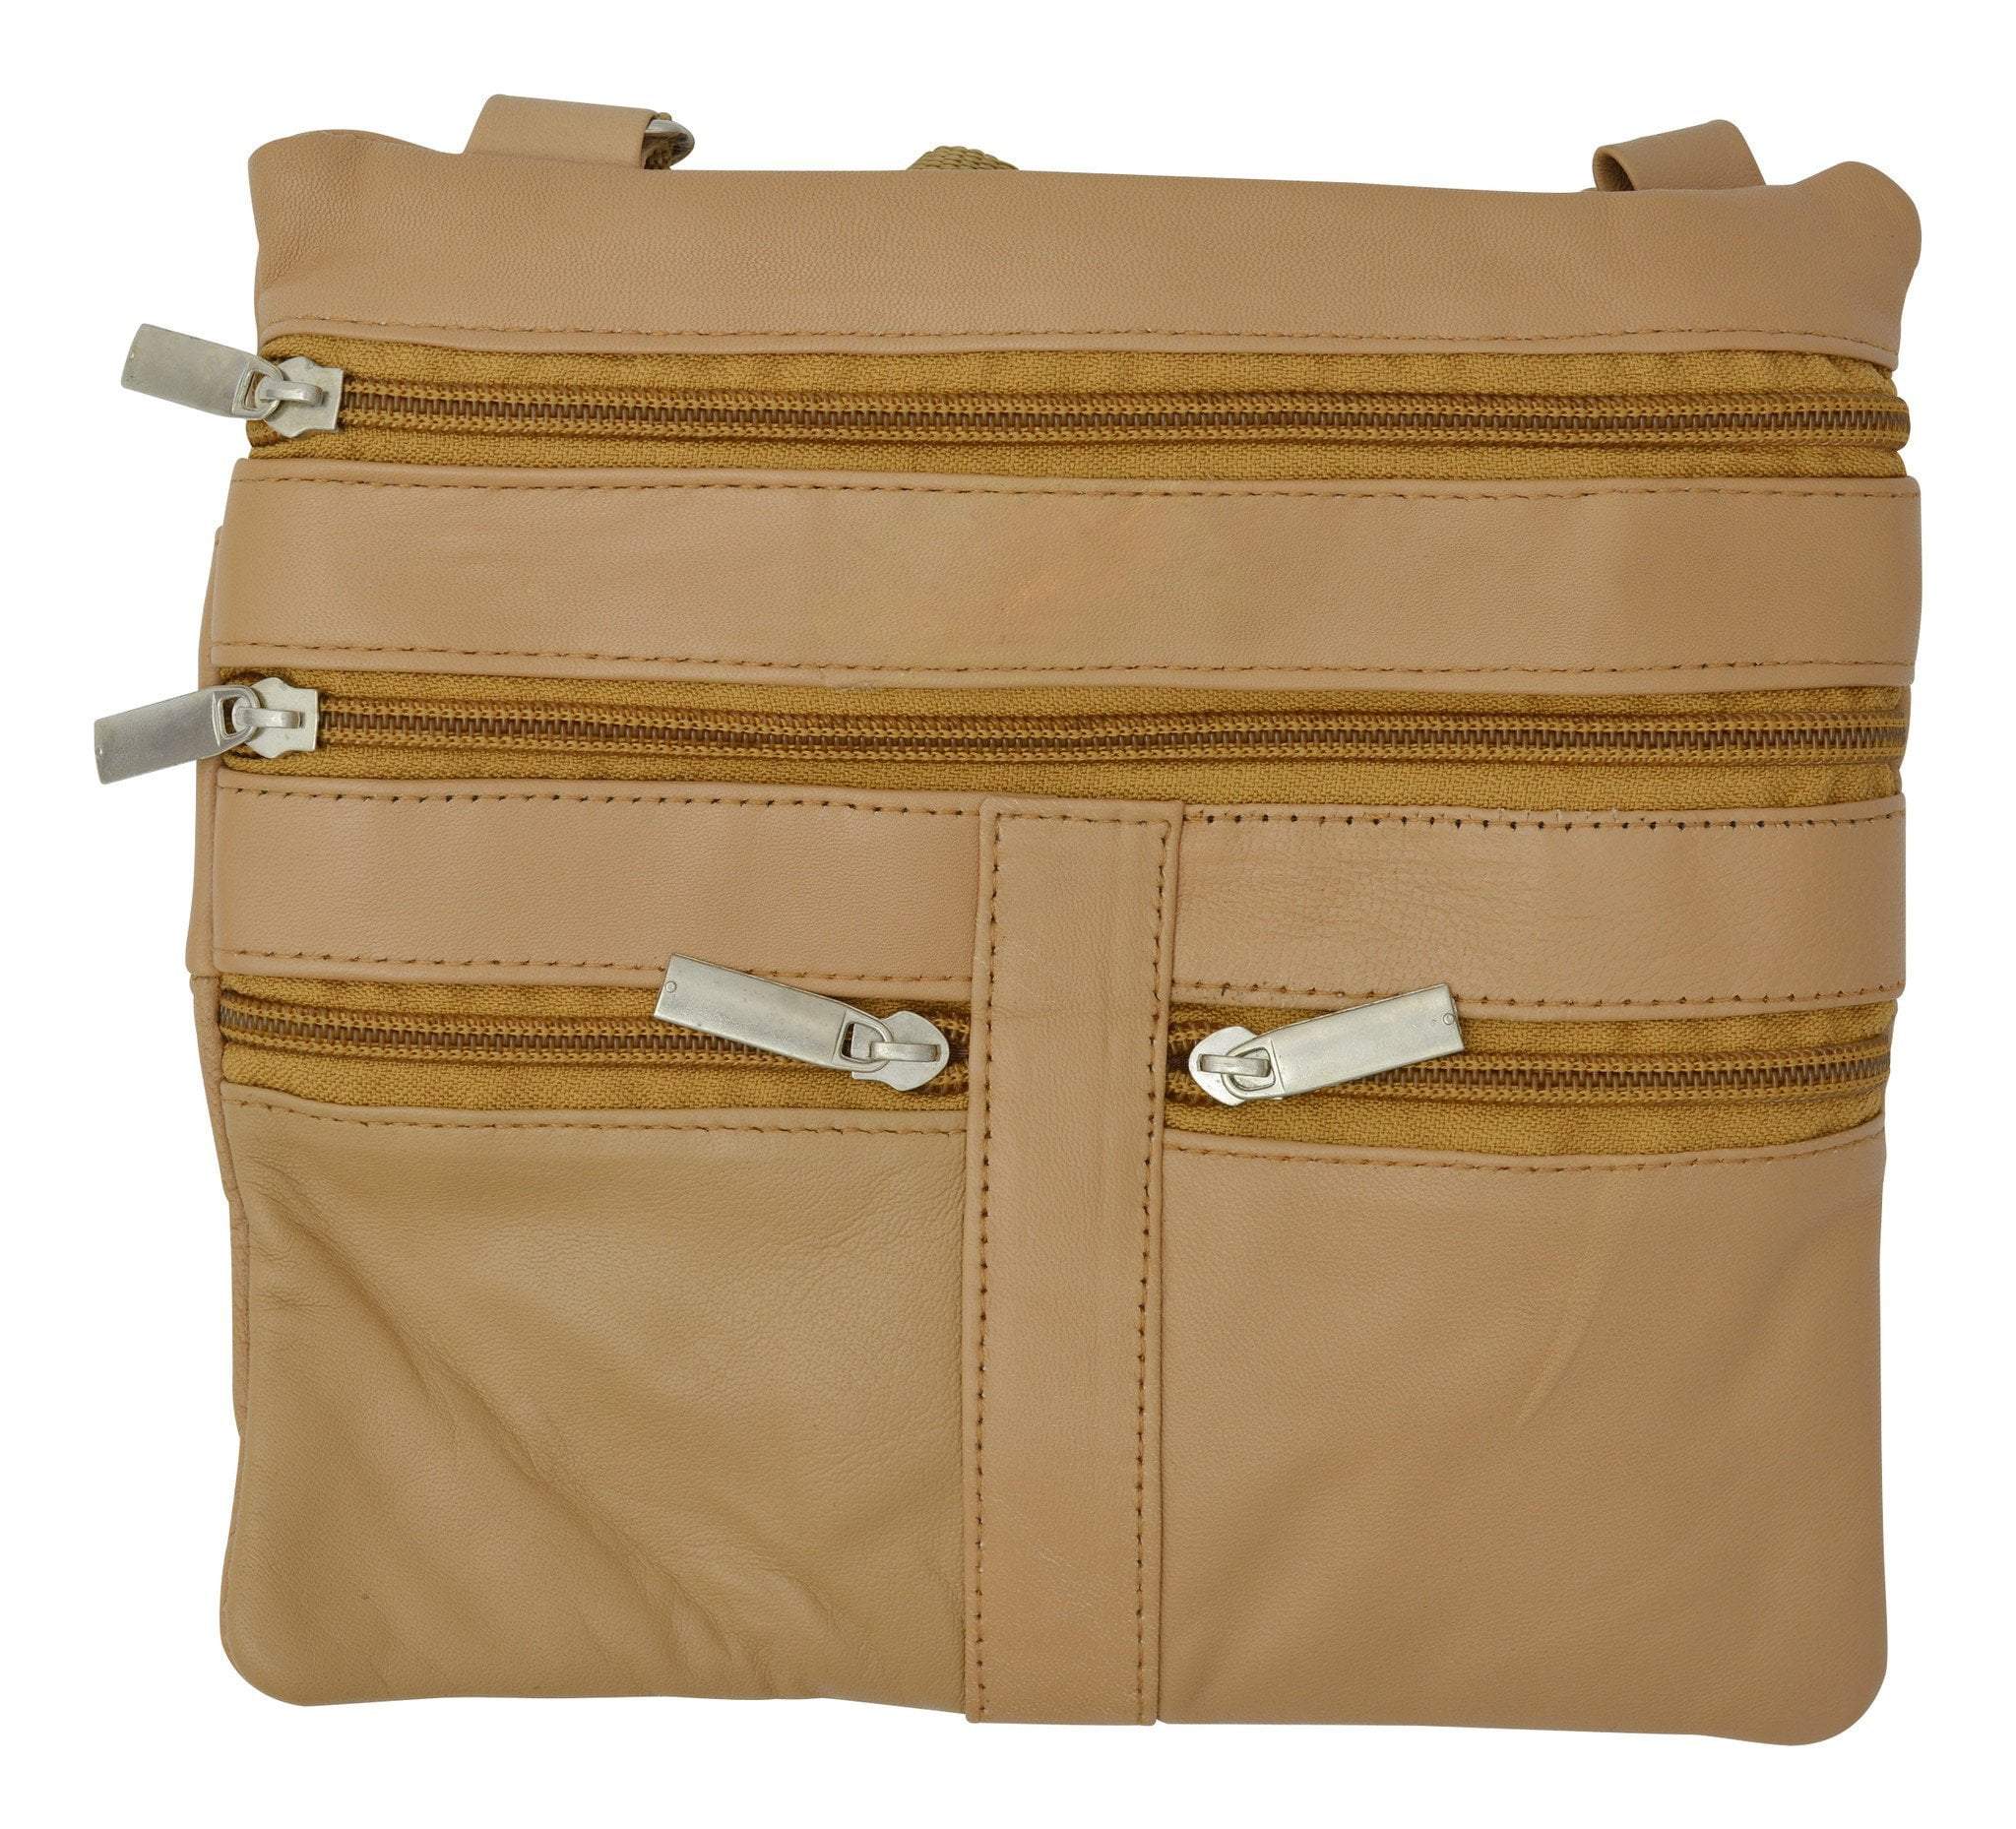 marshal tan soft leather cross body bag purse shoulder bag 5 pocket organizer micro handbagtravel wallet multiple colors hn907 c c hn907 tn leather wallets for mens